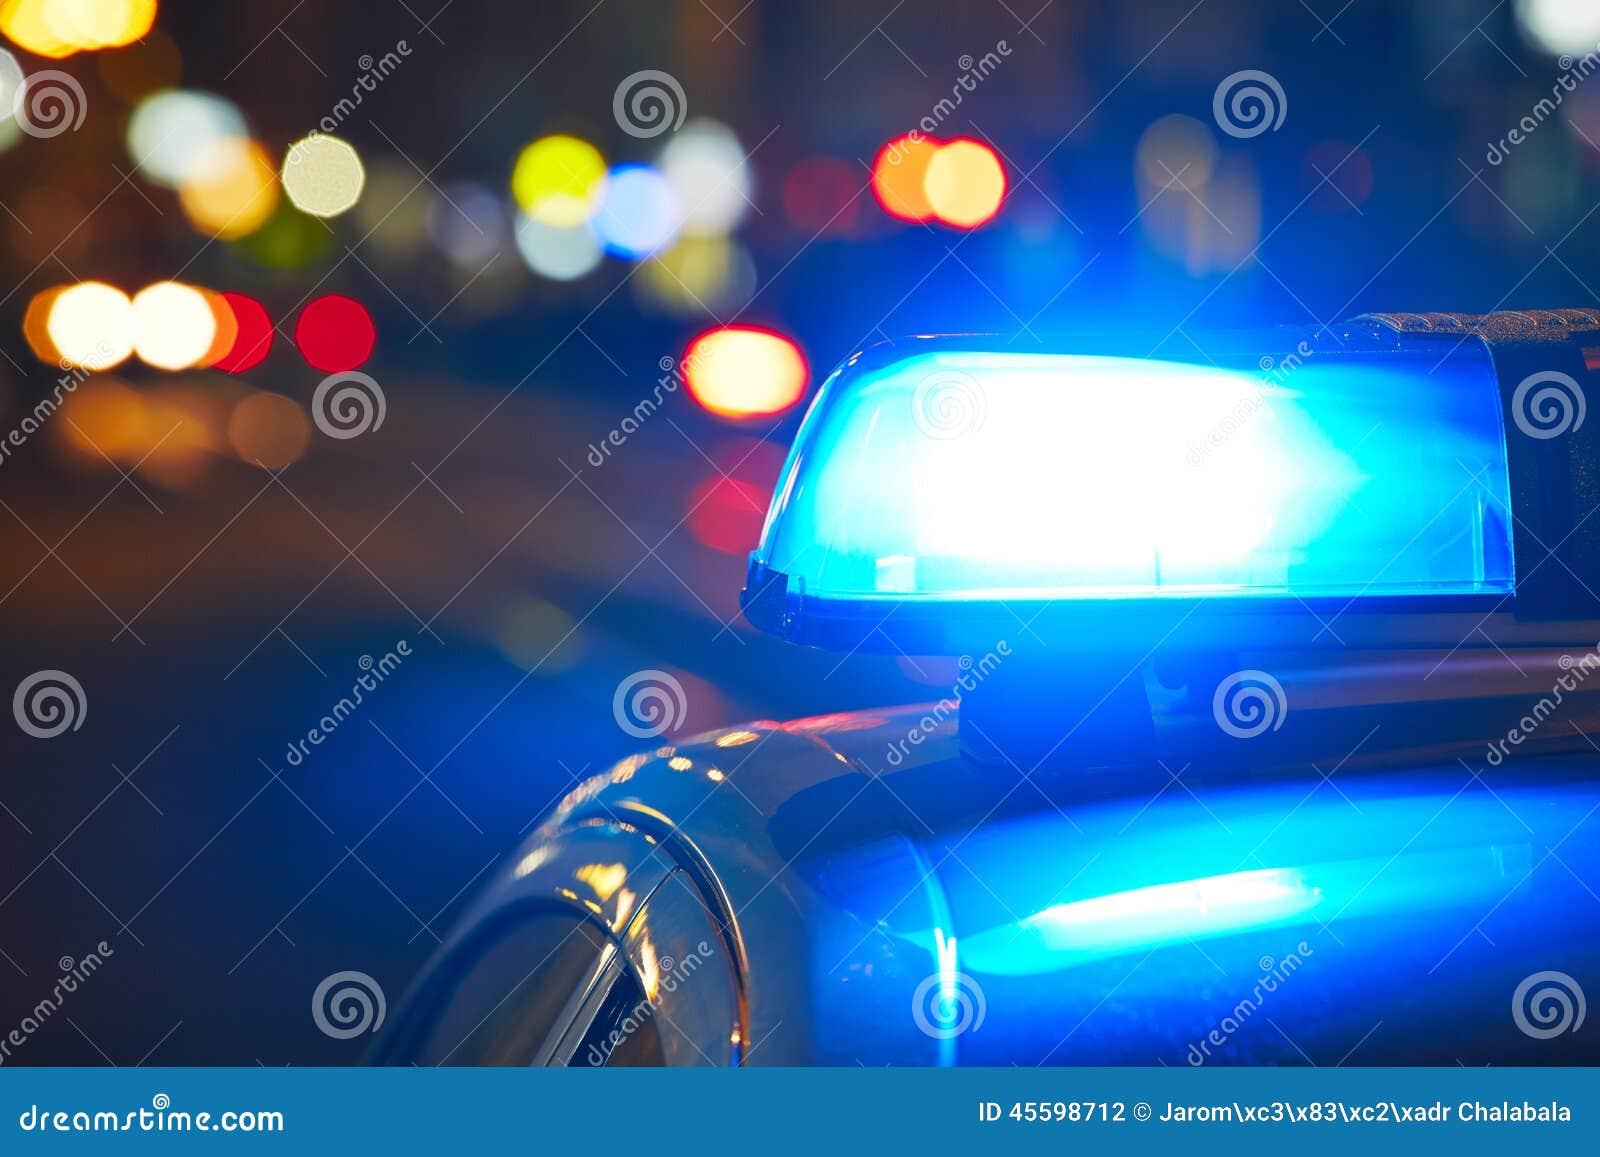 Sirène de police photo stock. Image du nuit, crime, nightlife - 45598712